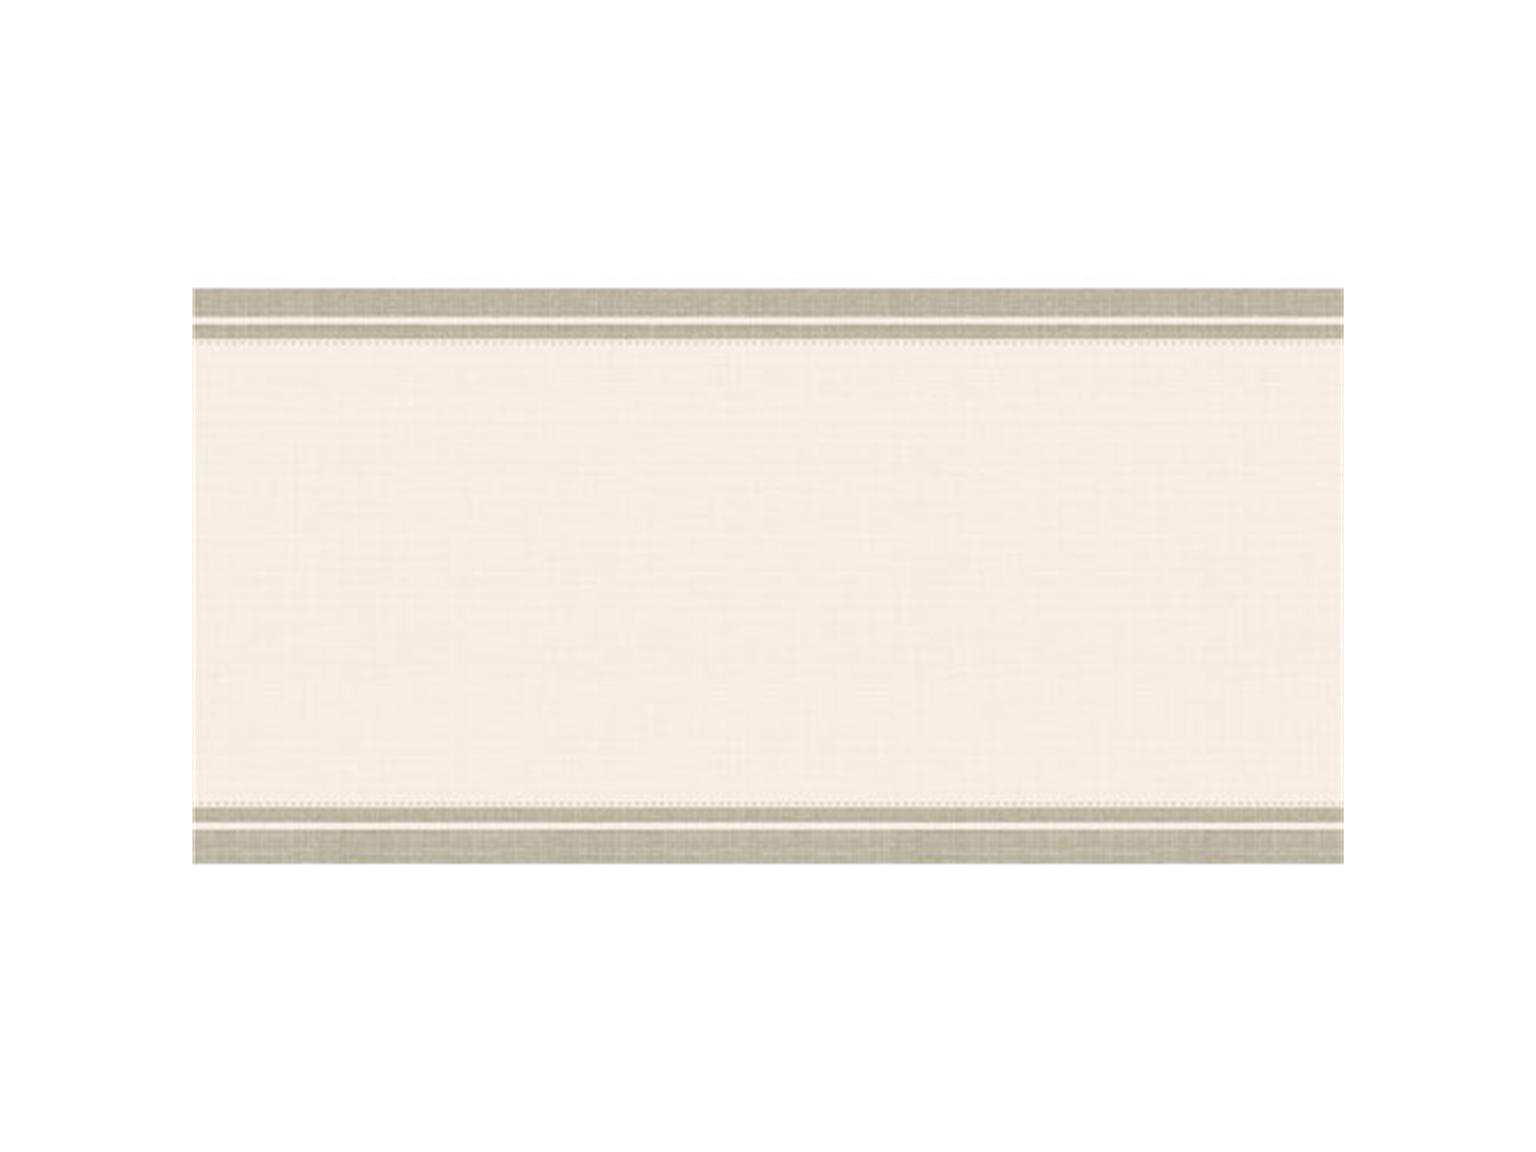 TISCHLAEUFER AIRLAID  40 cm x24 lfm, Brooklyn beige/beige grey